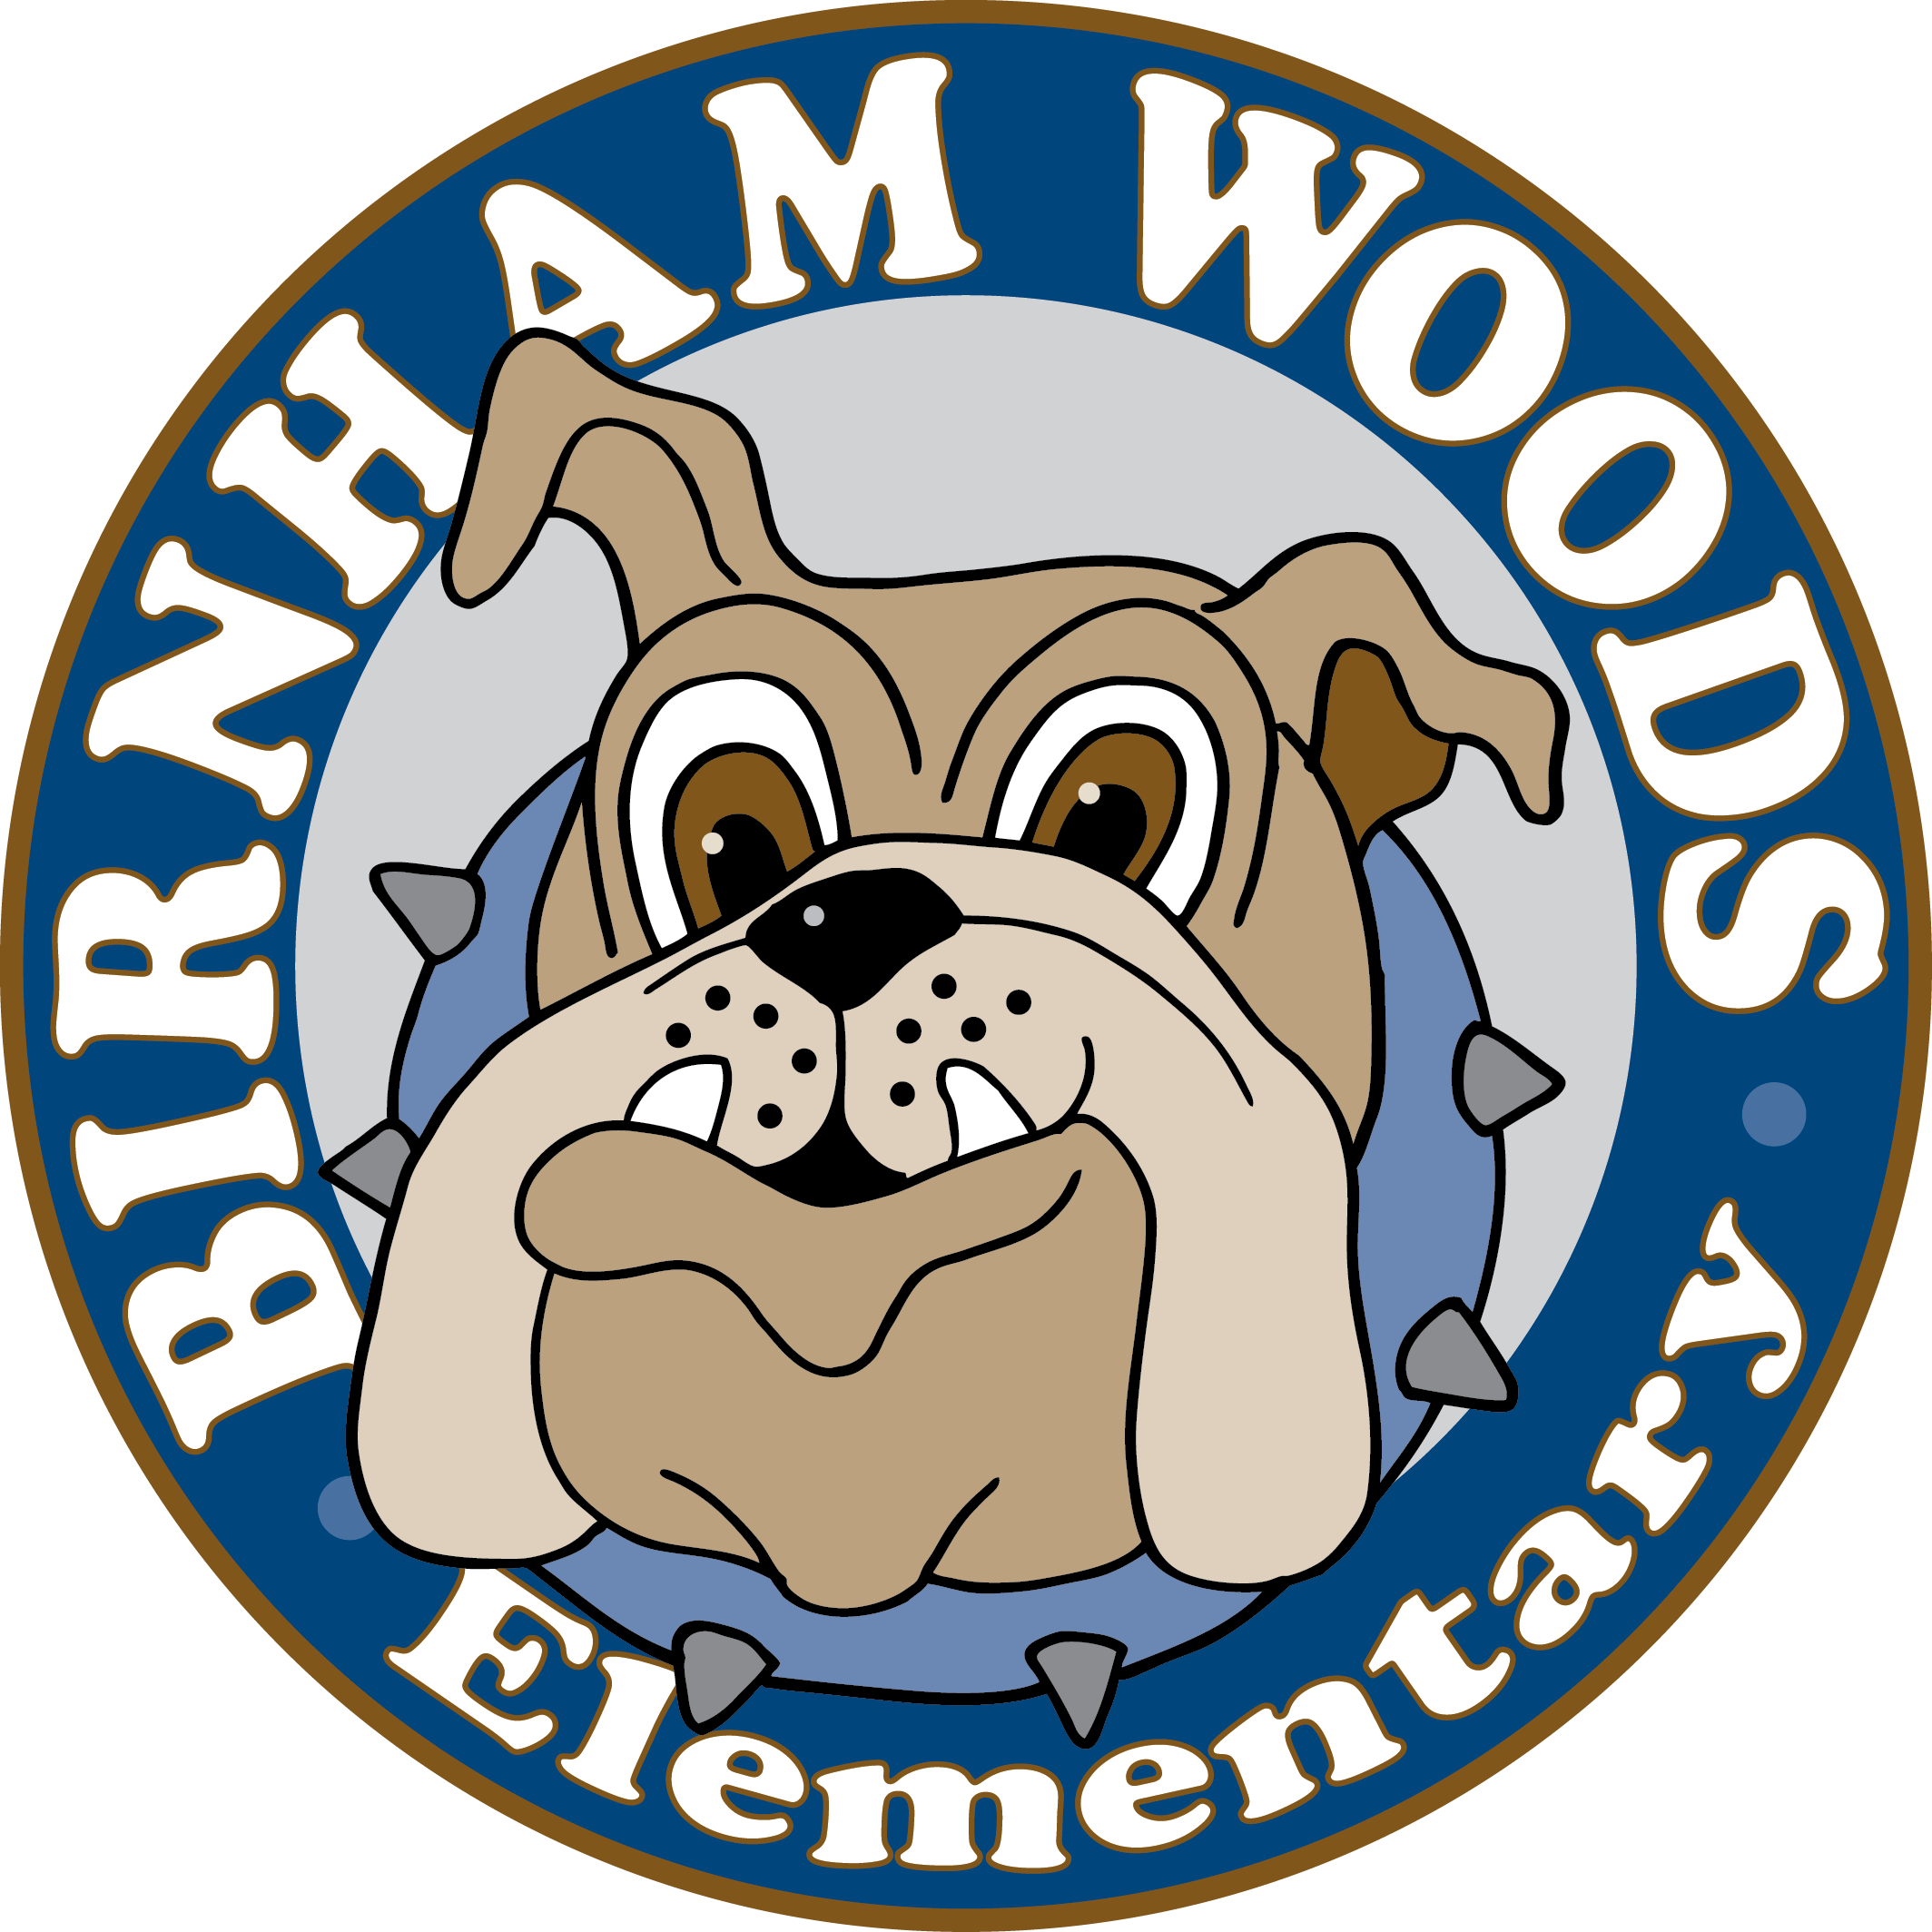 Birnham Woods Elementary